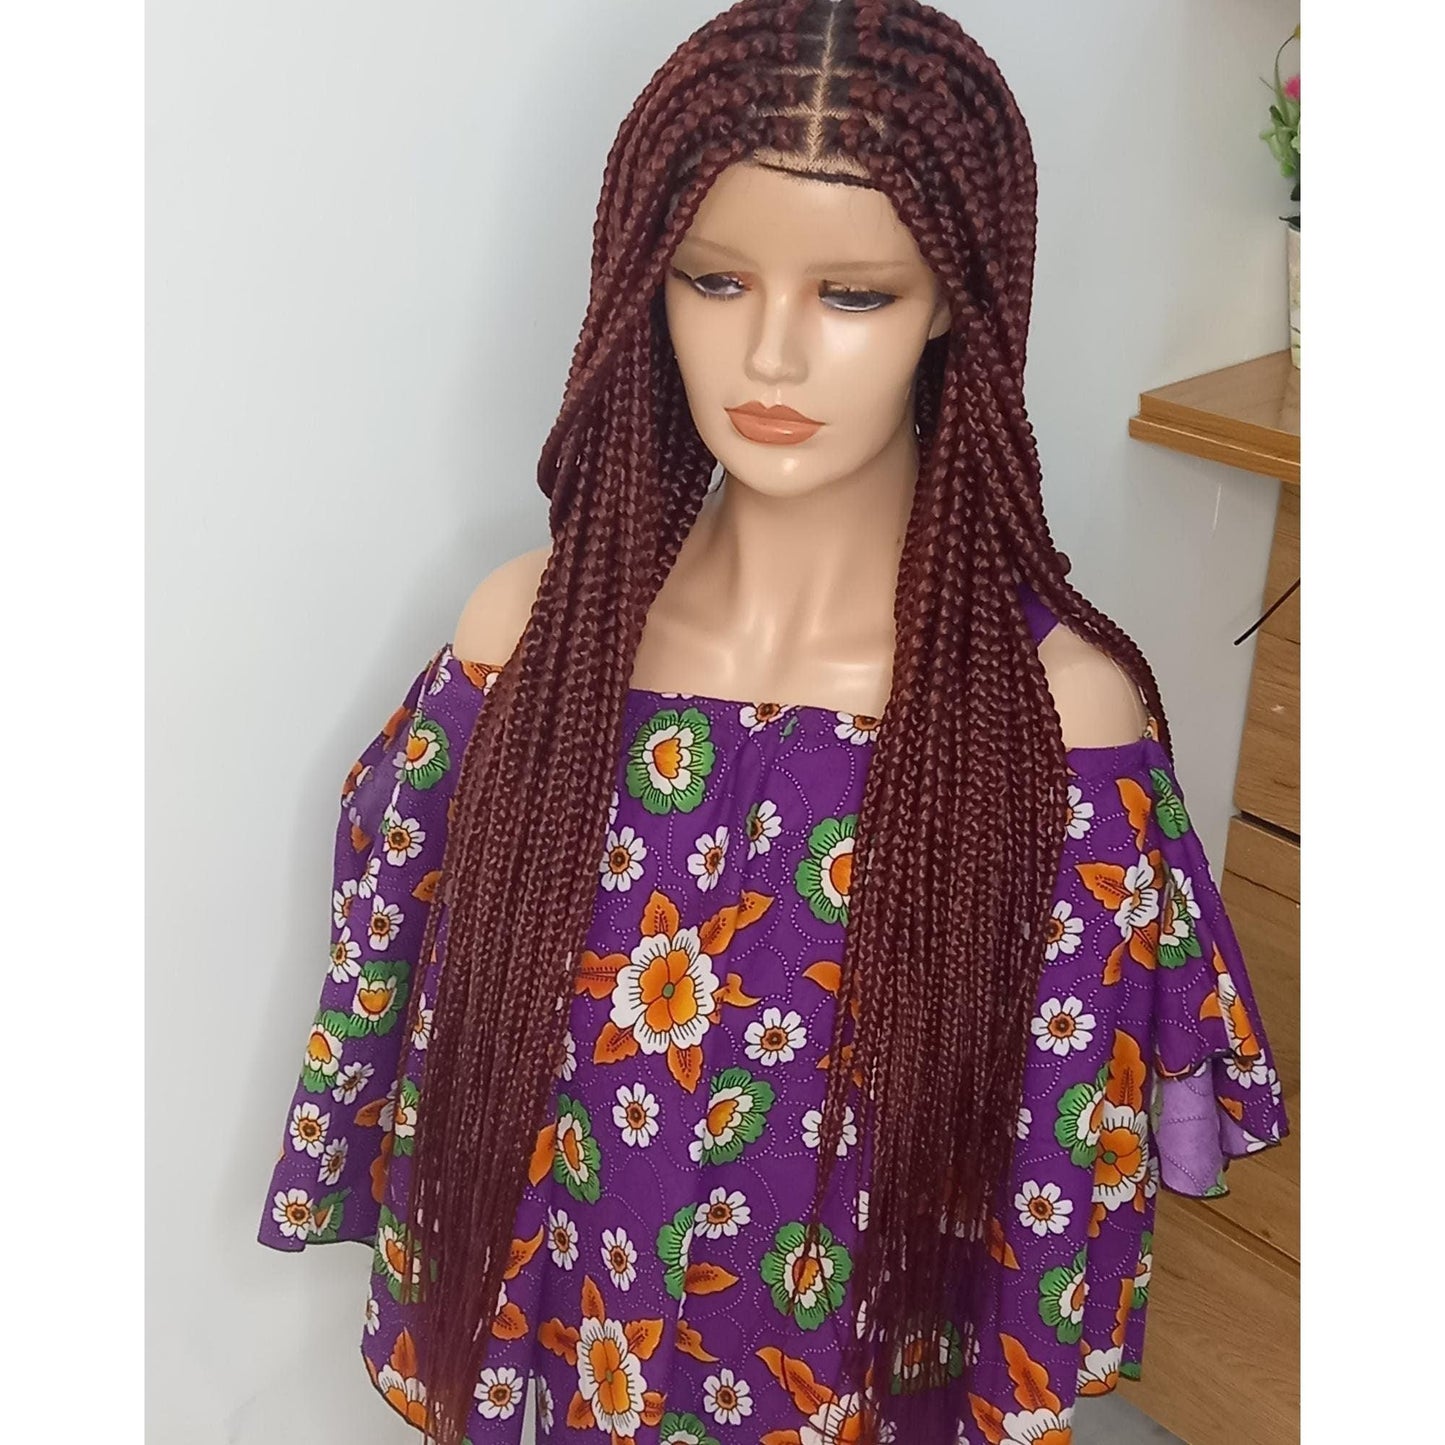 Burgundy Box Braid wig on Full Lace Braided Wigs for Black Women